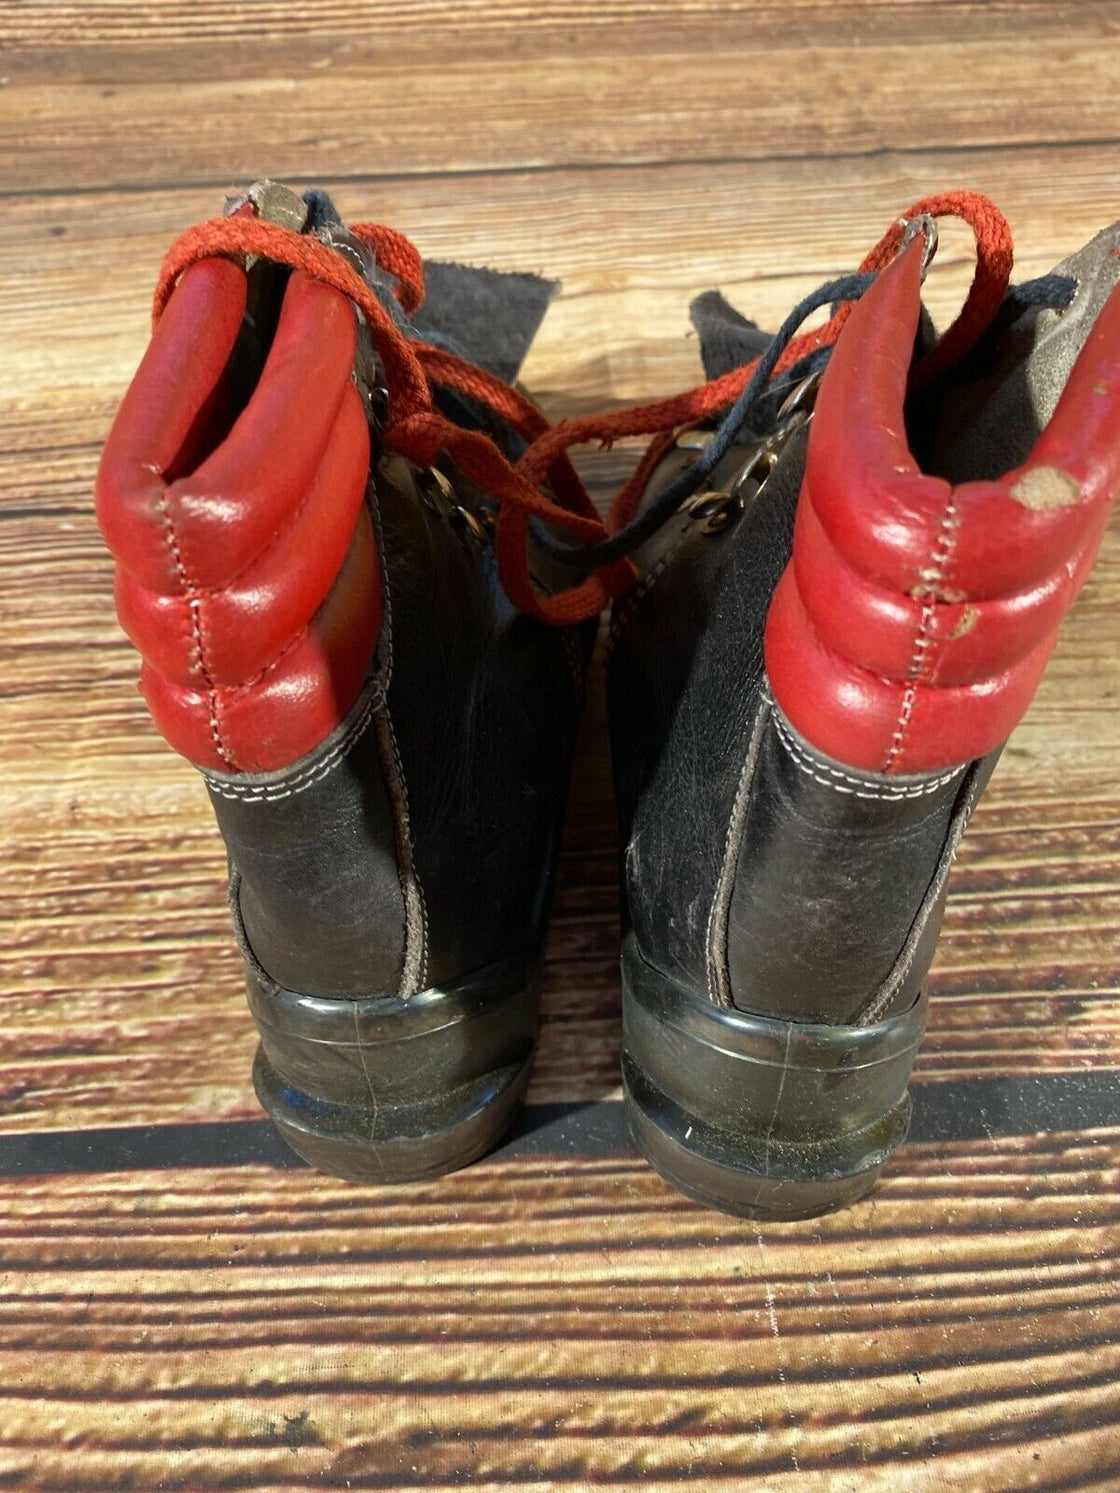 Vintage Alpine Ski Boots Skiing EU38 US5.5 UK4.5 Mondo 240 for Cable Bindings